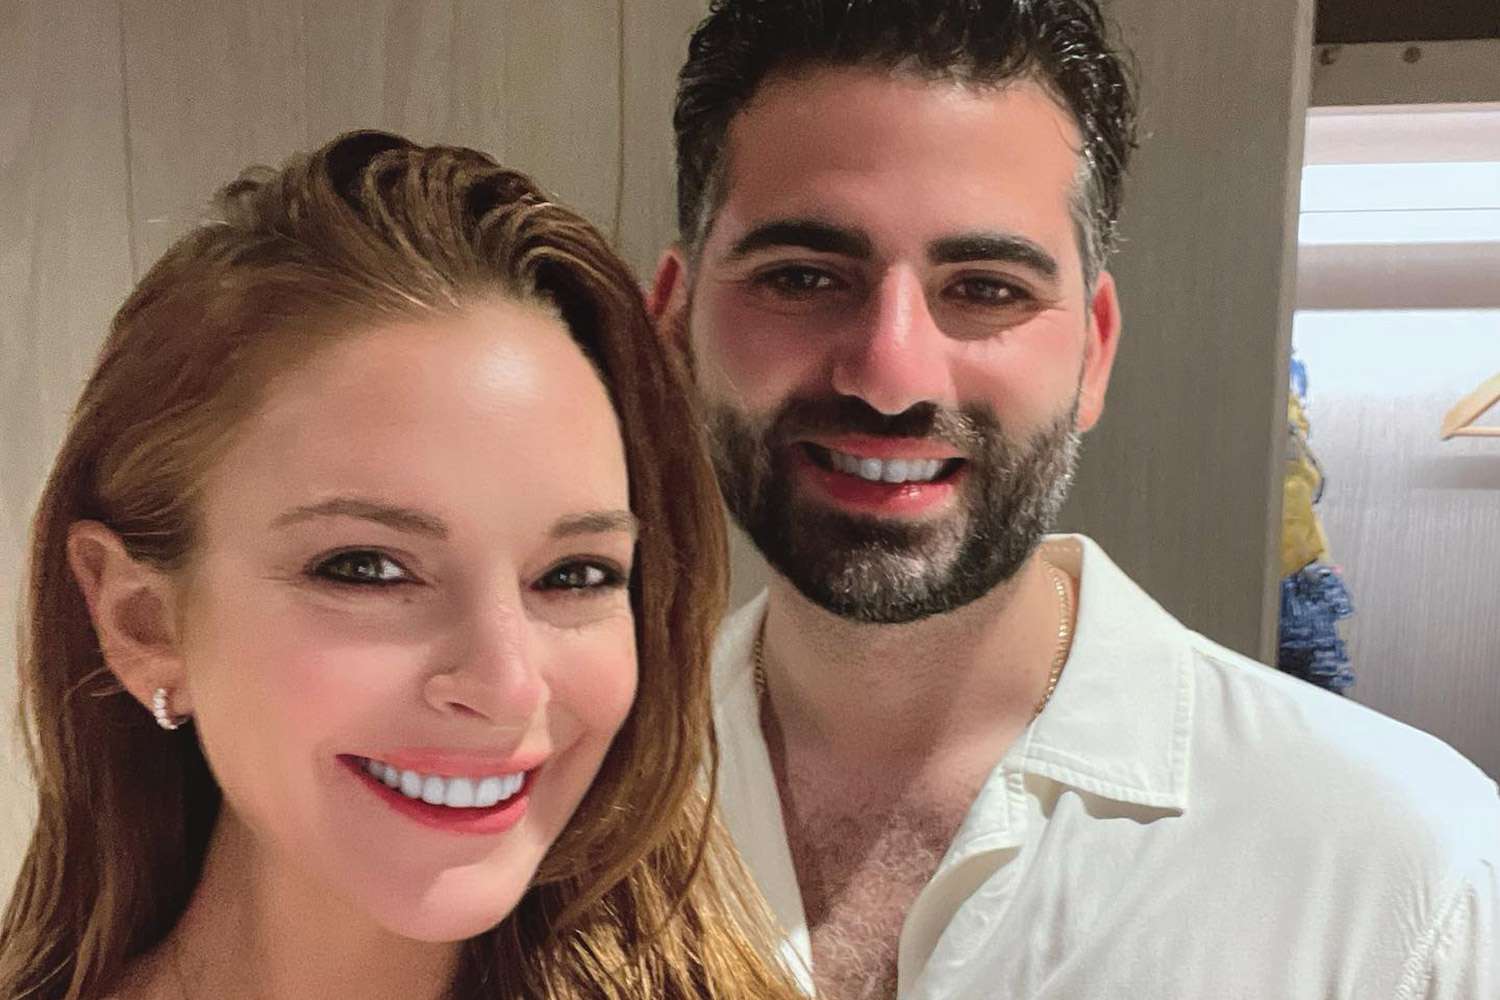 Lindsay Lohan Calls Fiance 'Husband' in Sweet Instagram Post primary: https://www.instagram.com/p/CffV0zQqsip/